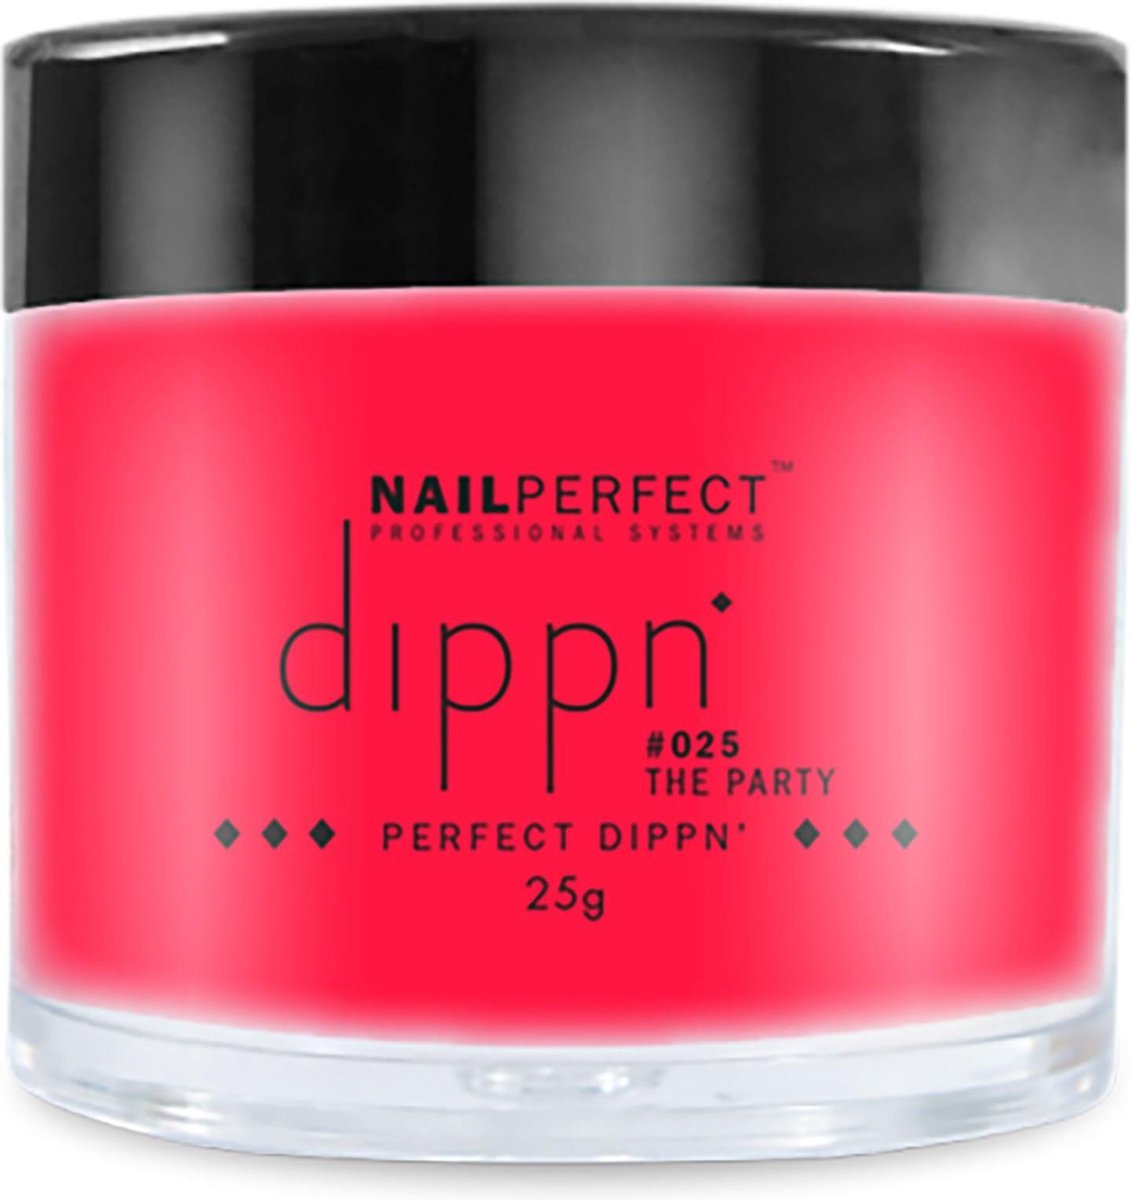 Dip poeder voor nagels - Dippn Nailperfect - 025 The party - 25gr